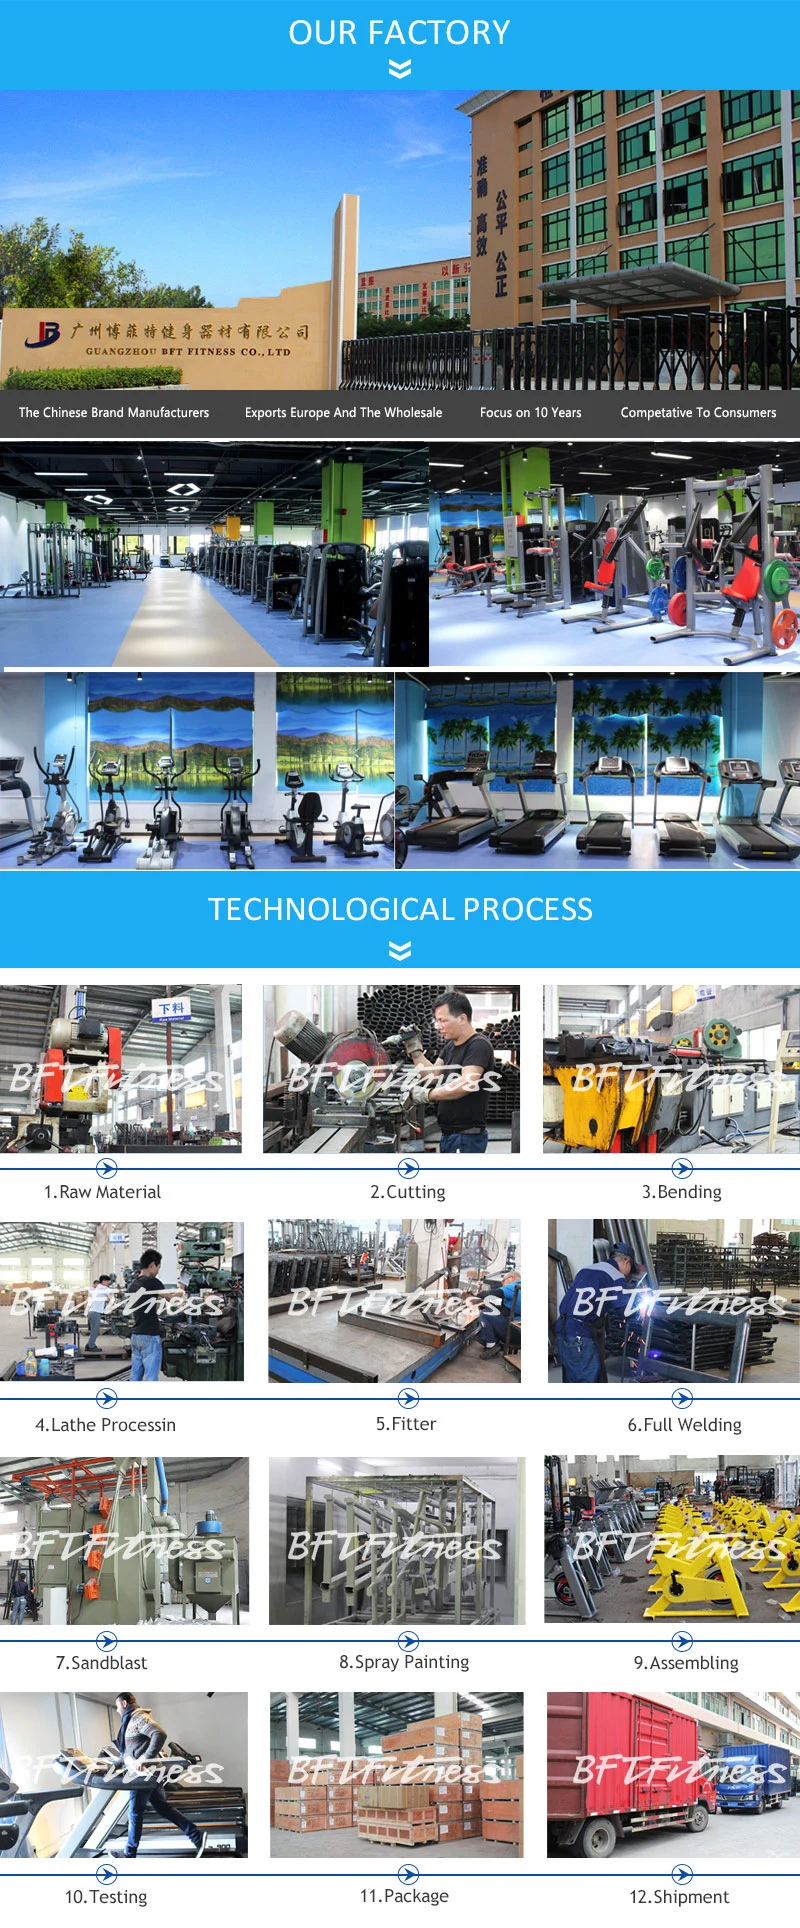 Hotel Gym Equipment/ Gym Multi-Station Machine for Sale (BFT-2025)